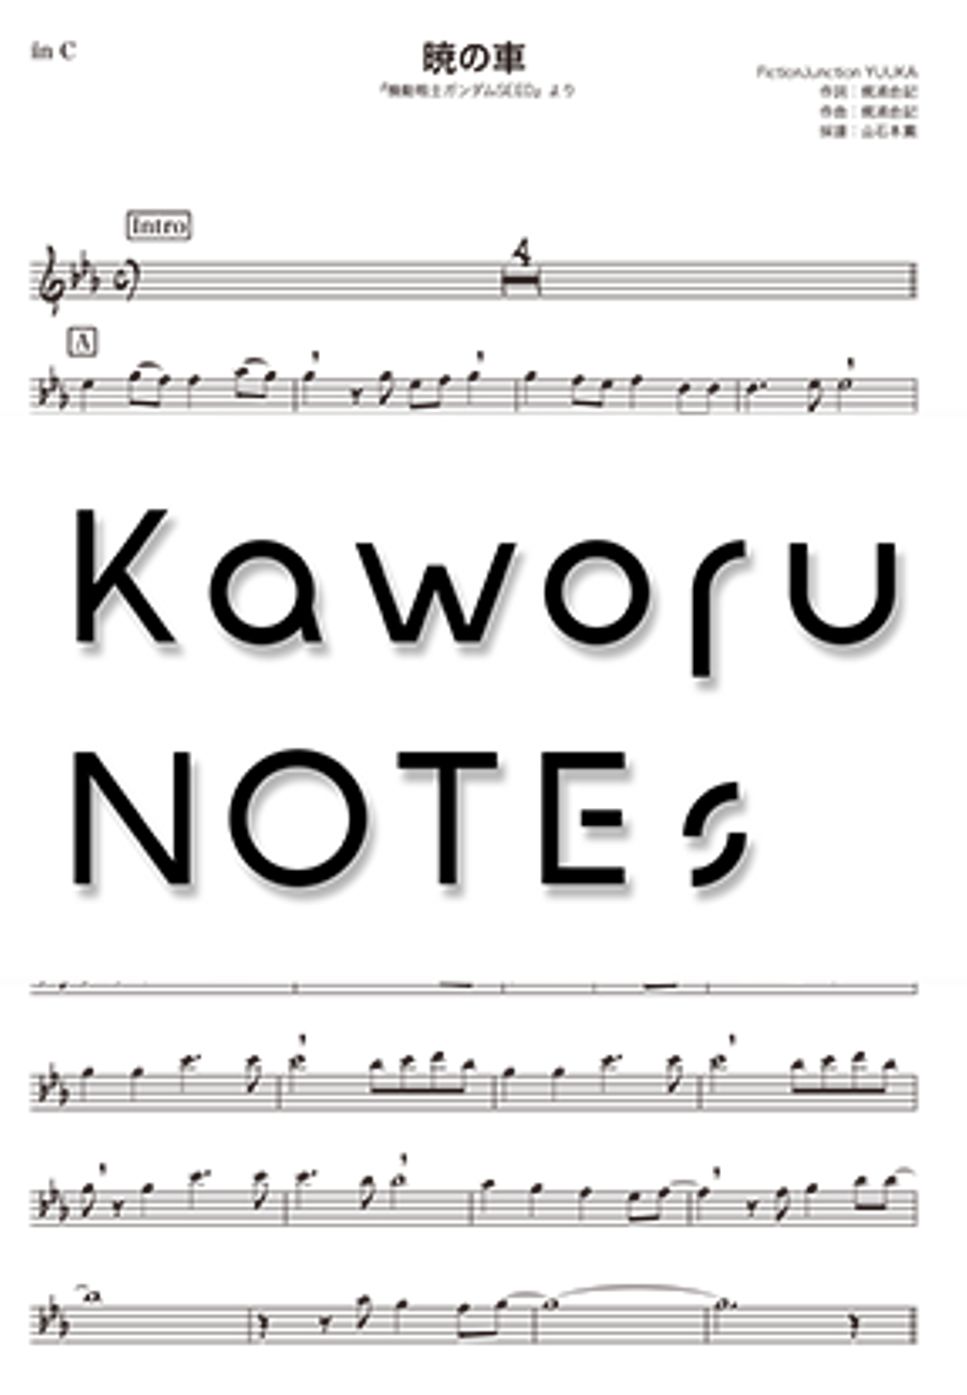 FictionJunction YUUKA - Akatsuki no Kuruma（in E♭/Mobile Suit Gundam SEED） by Kaworu NOTEs